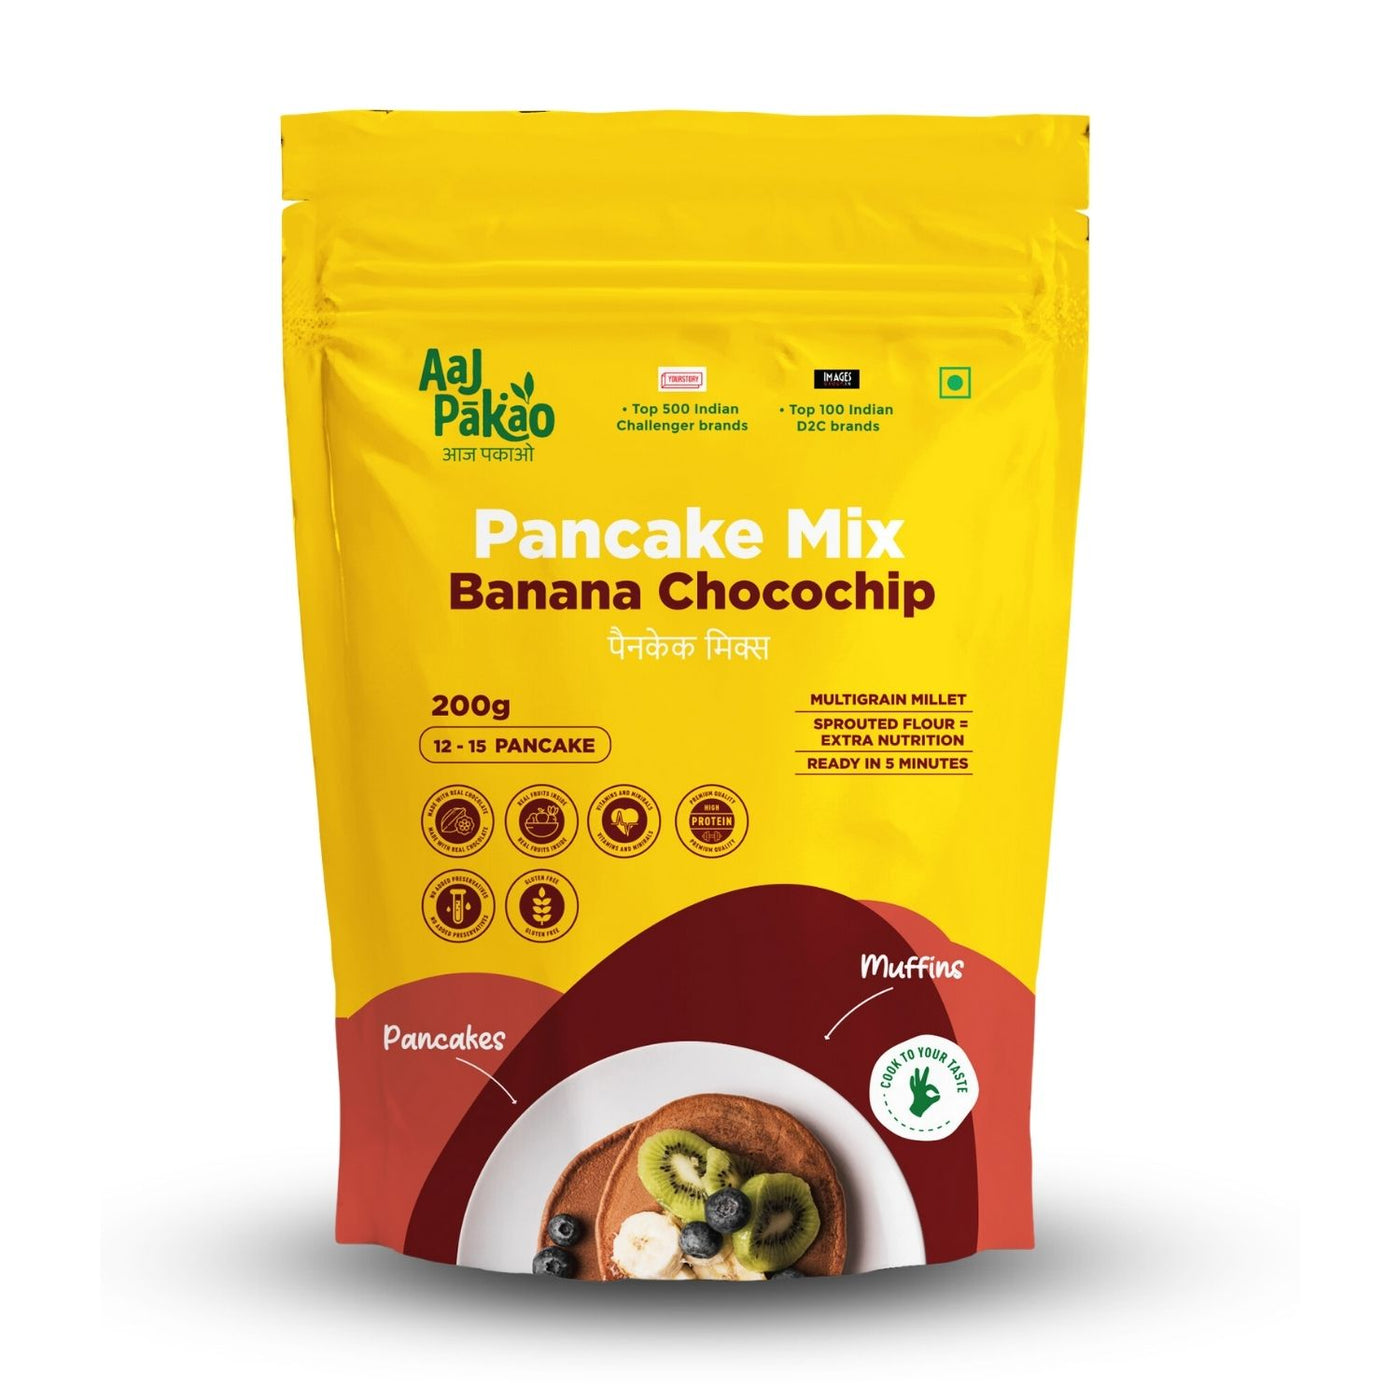 Banana Choco Chip Pancake Mix, pack of 3, 600 grams